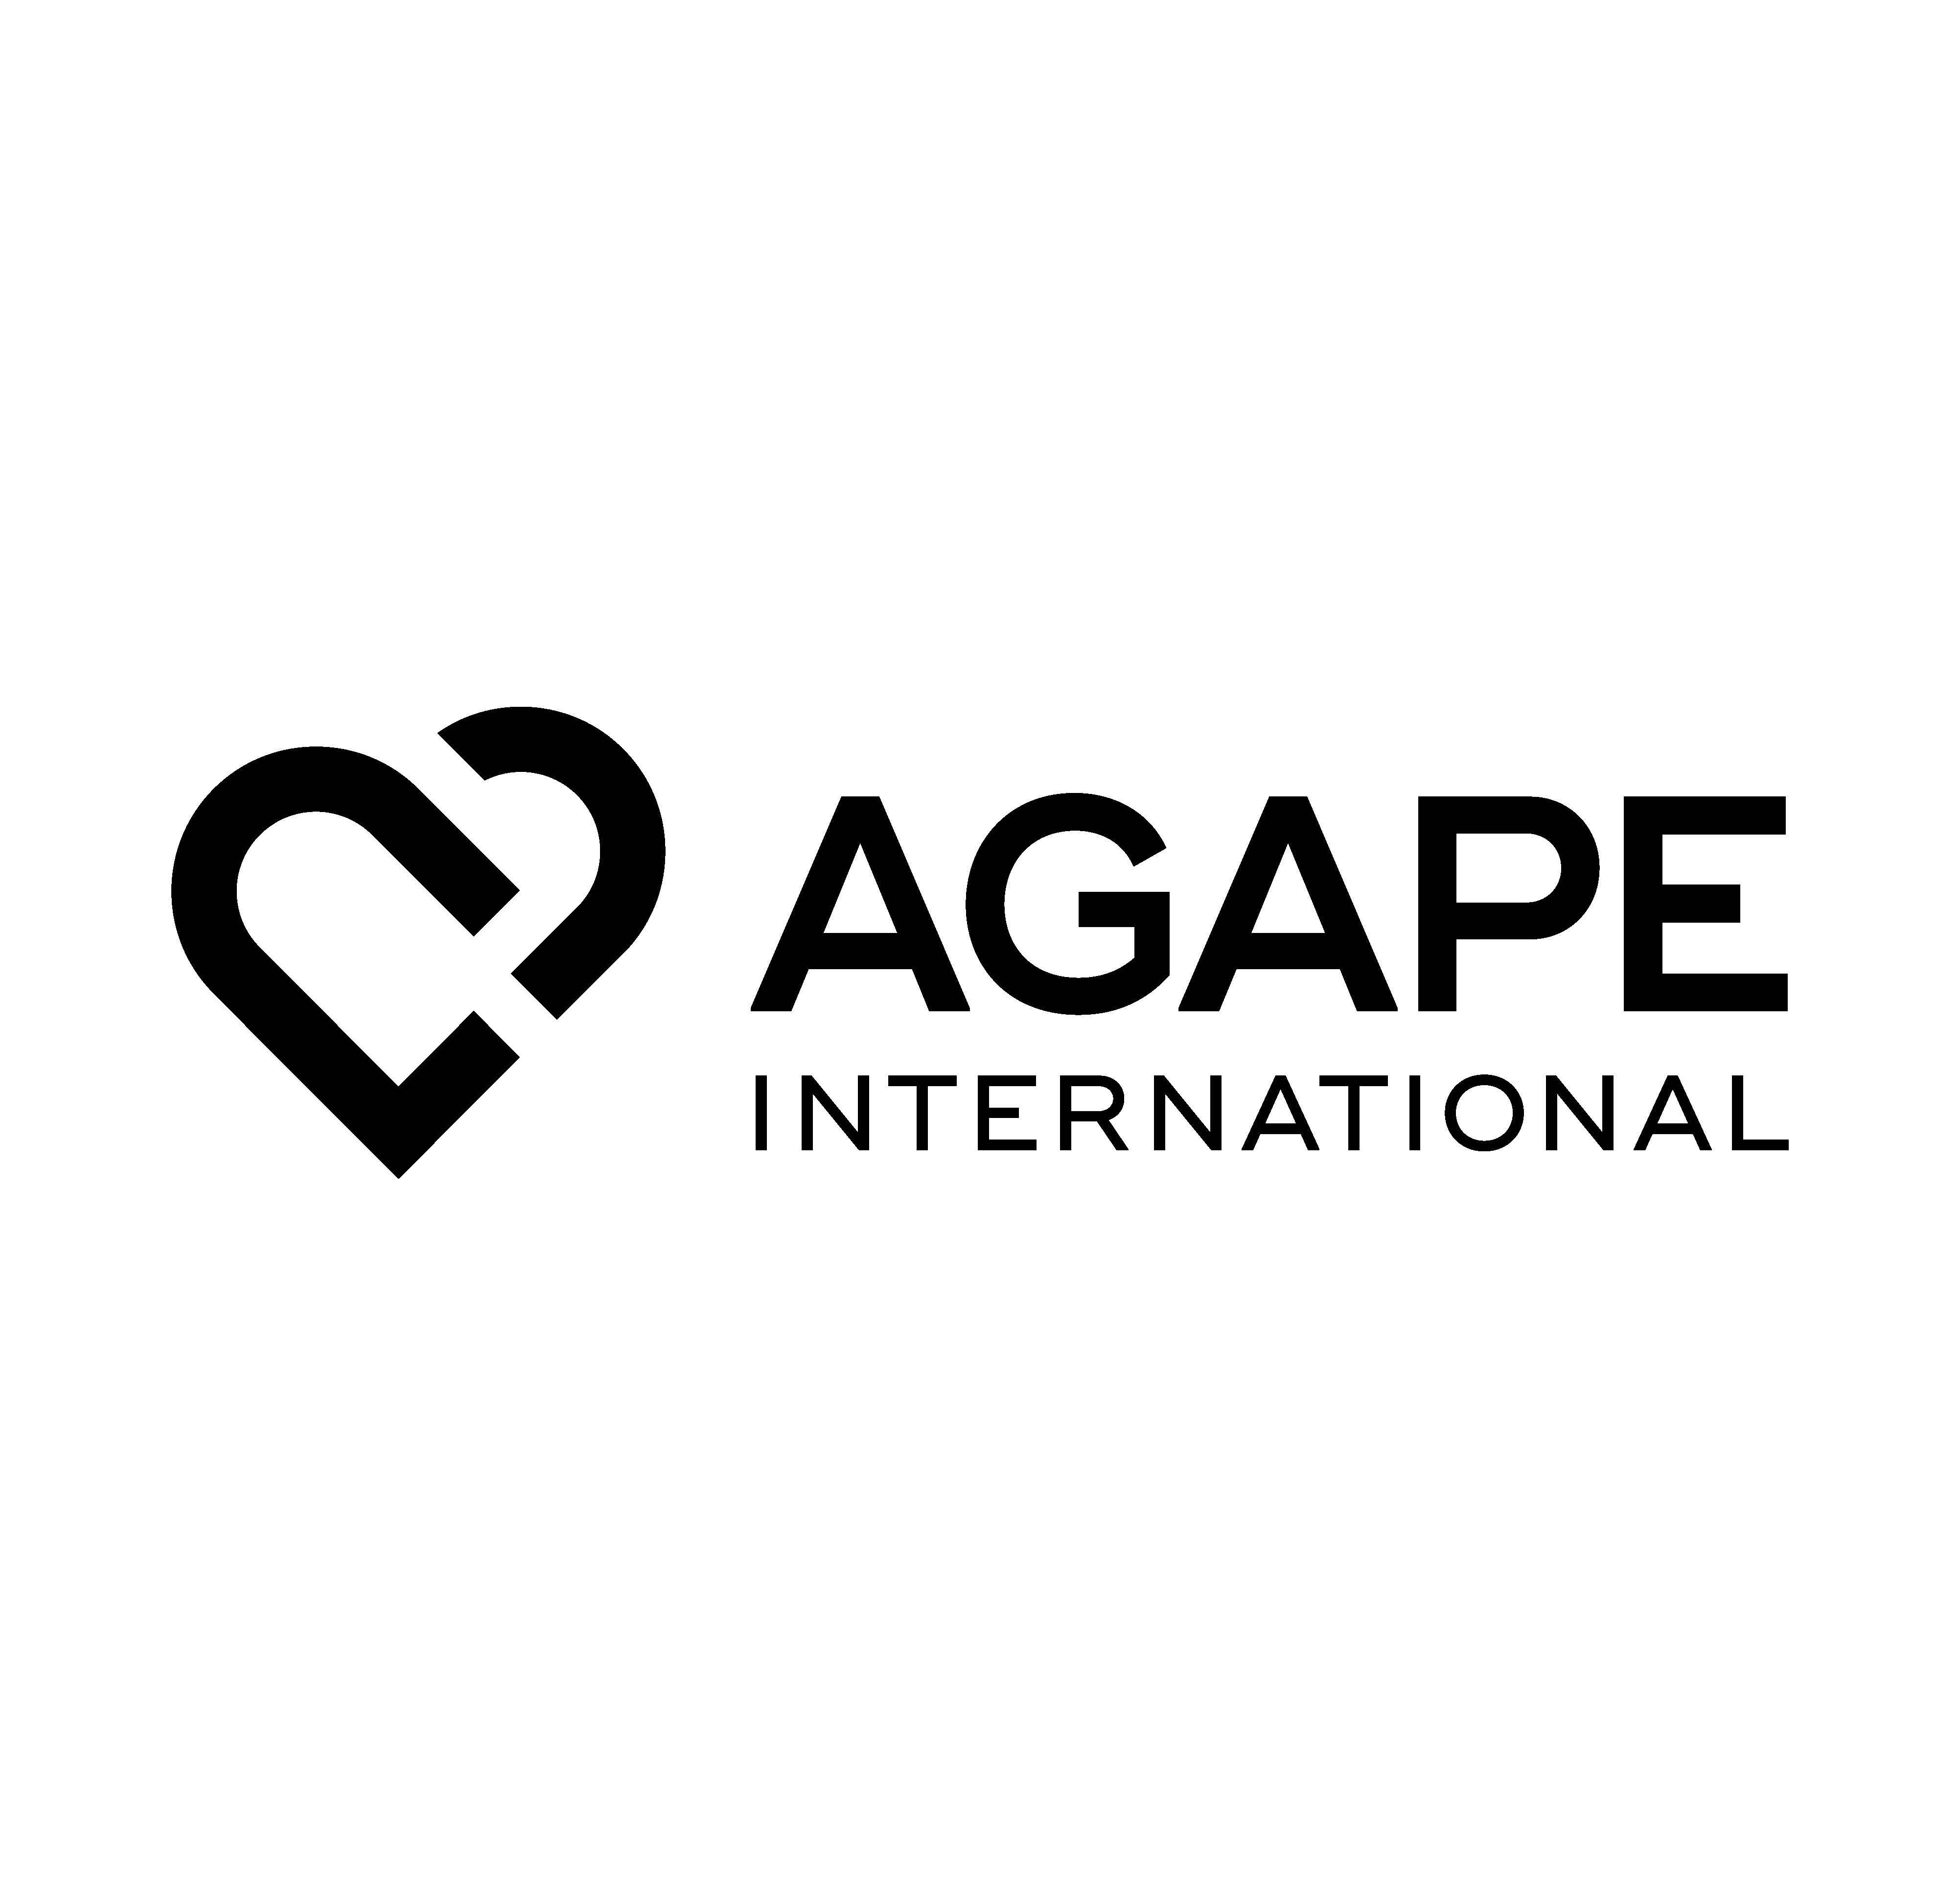 Agape international